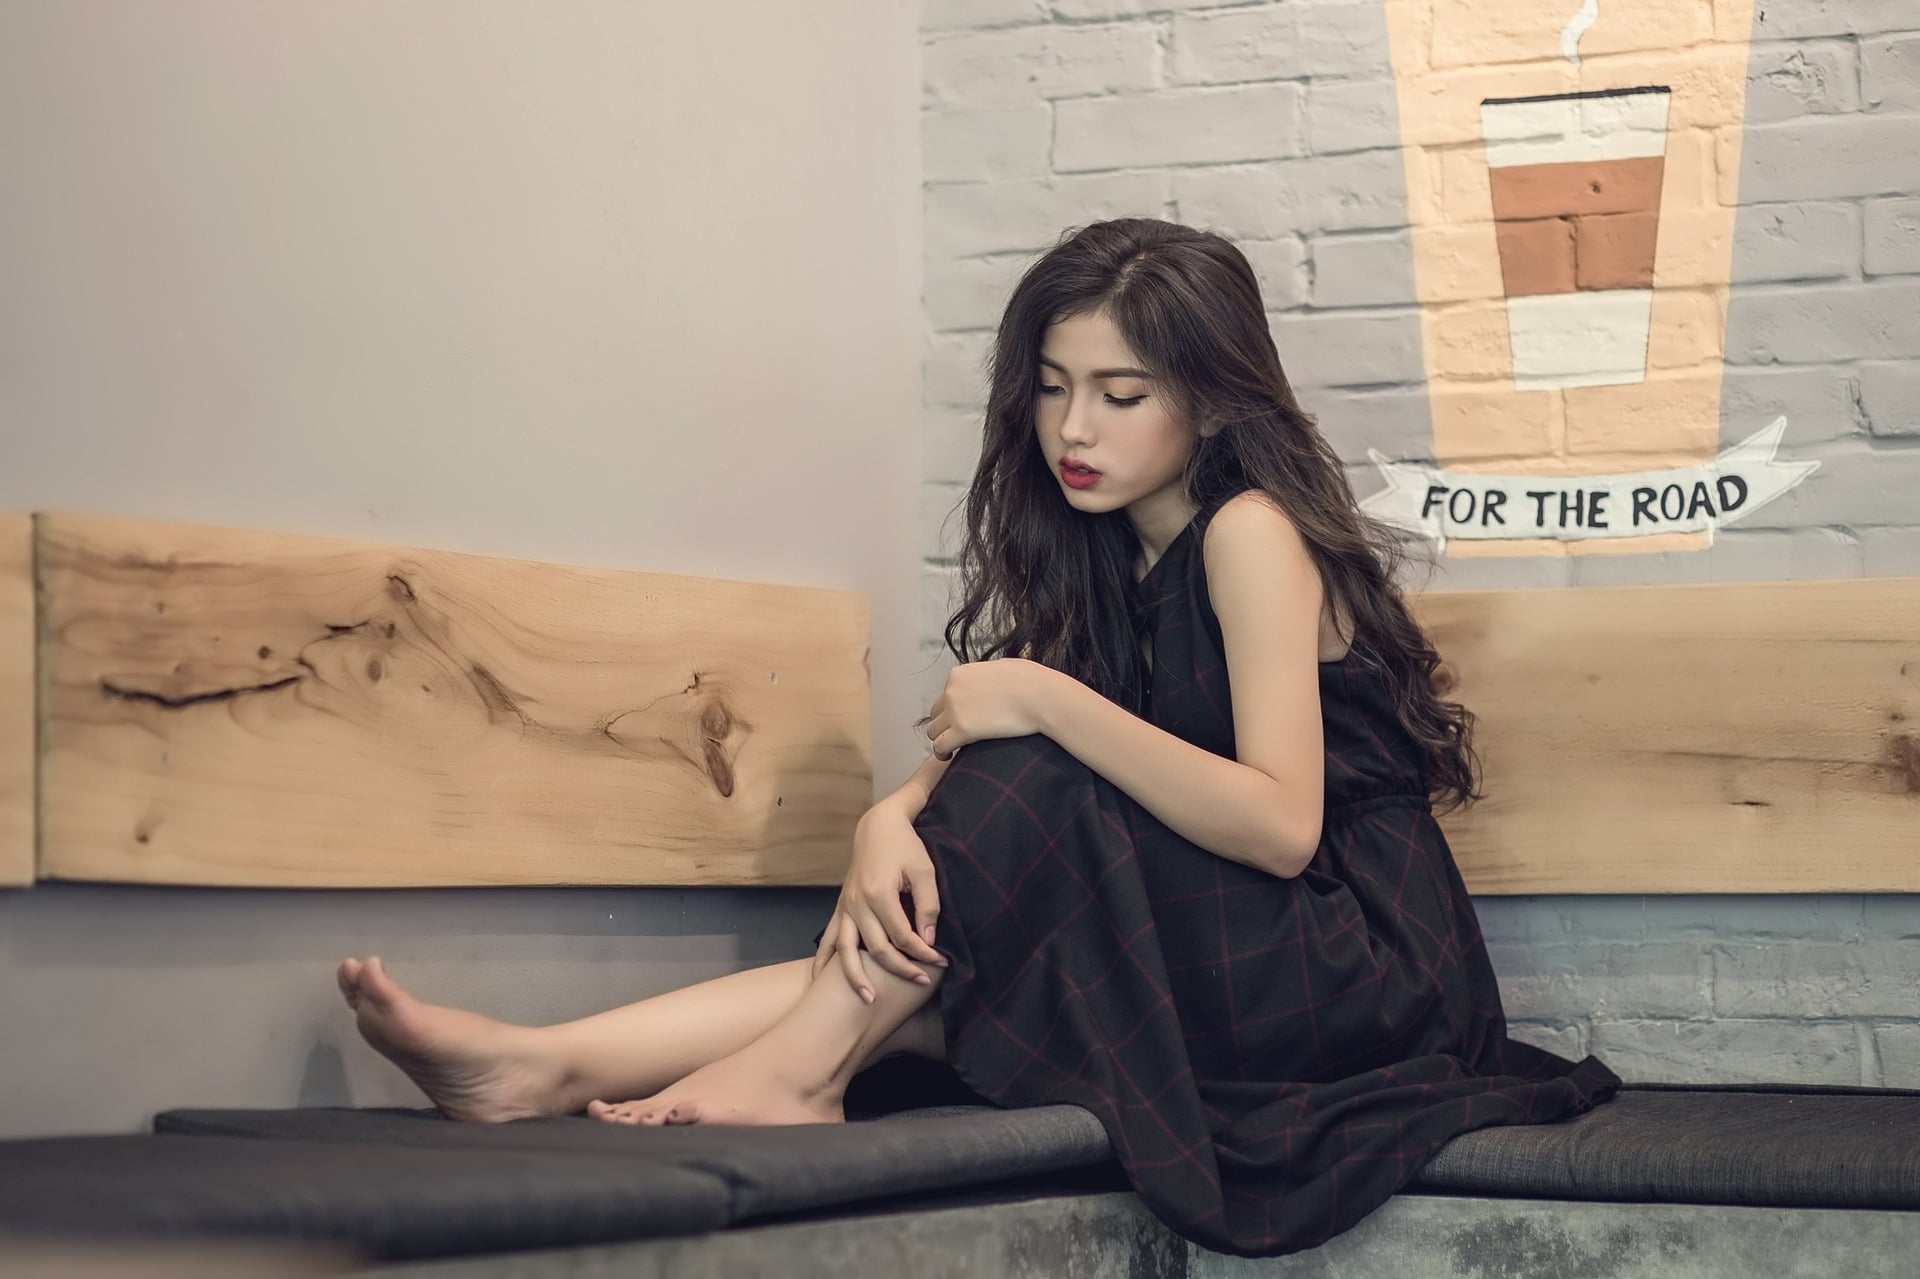 A sitting sad girl in black